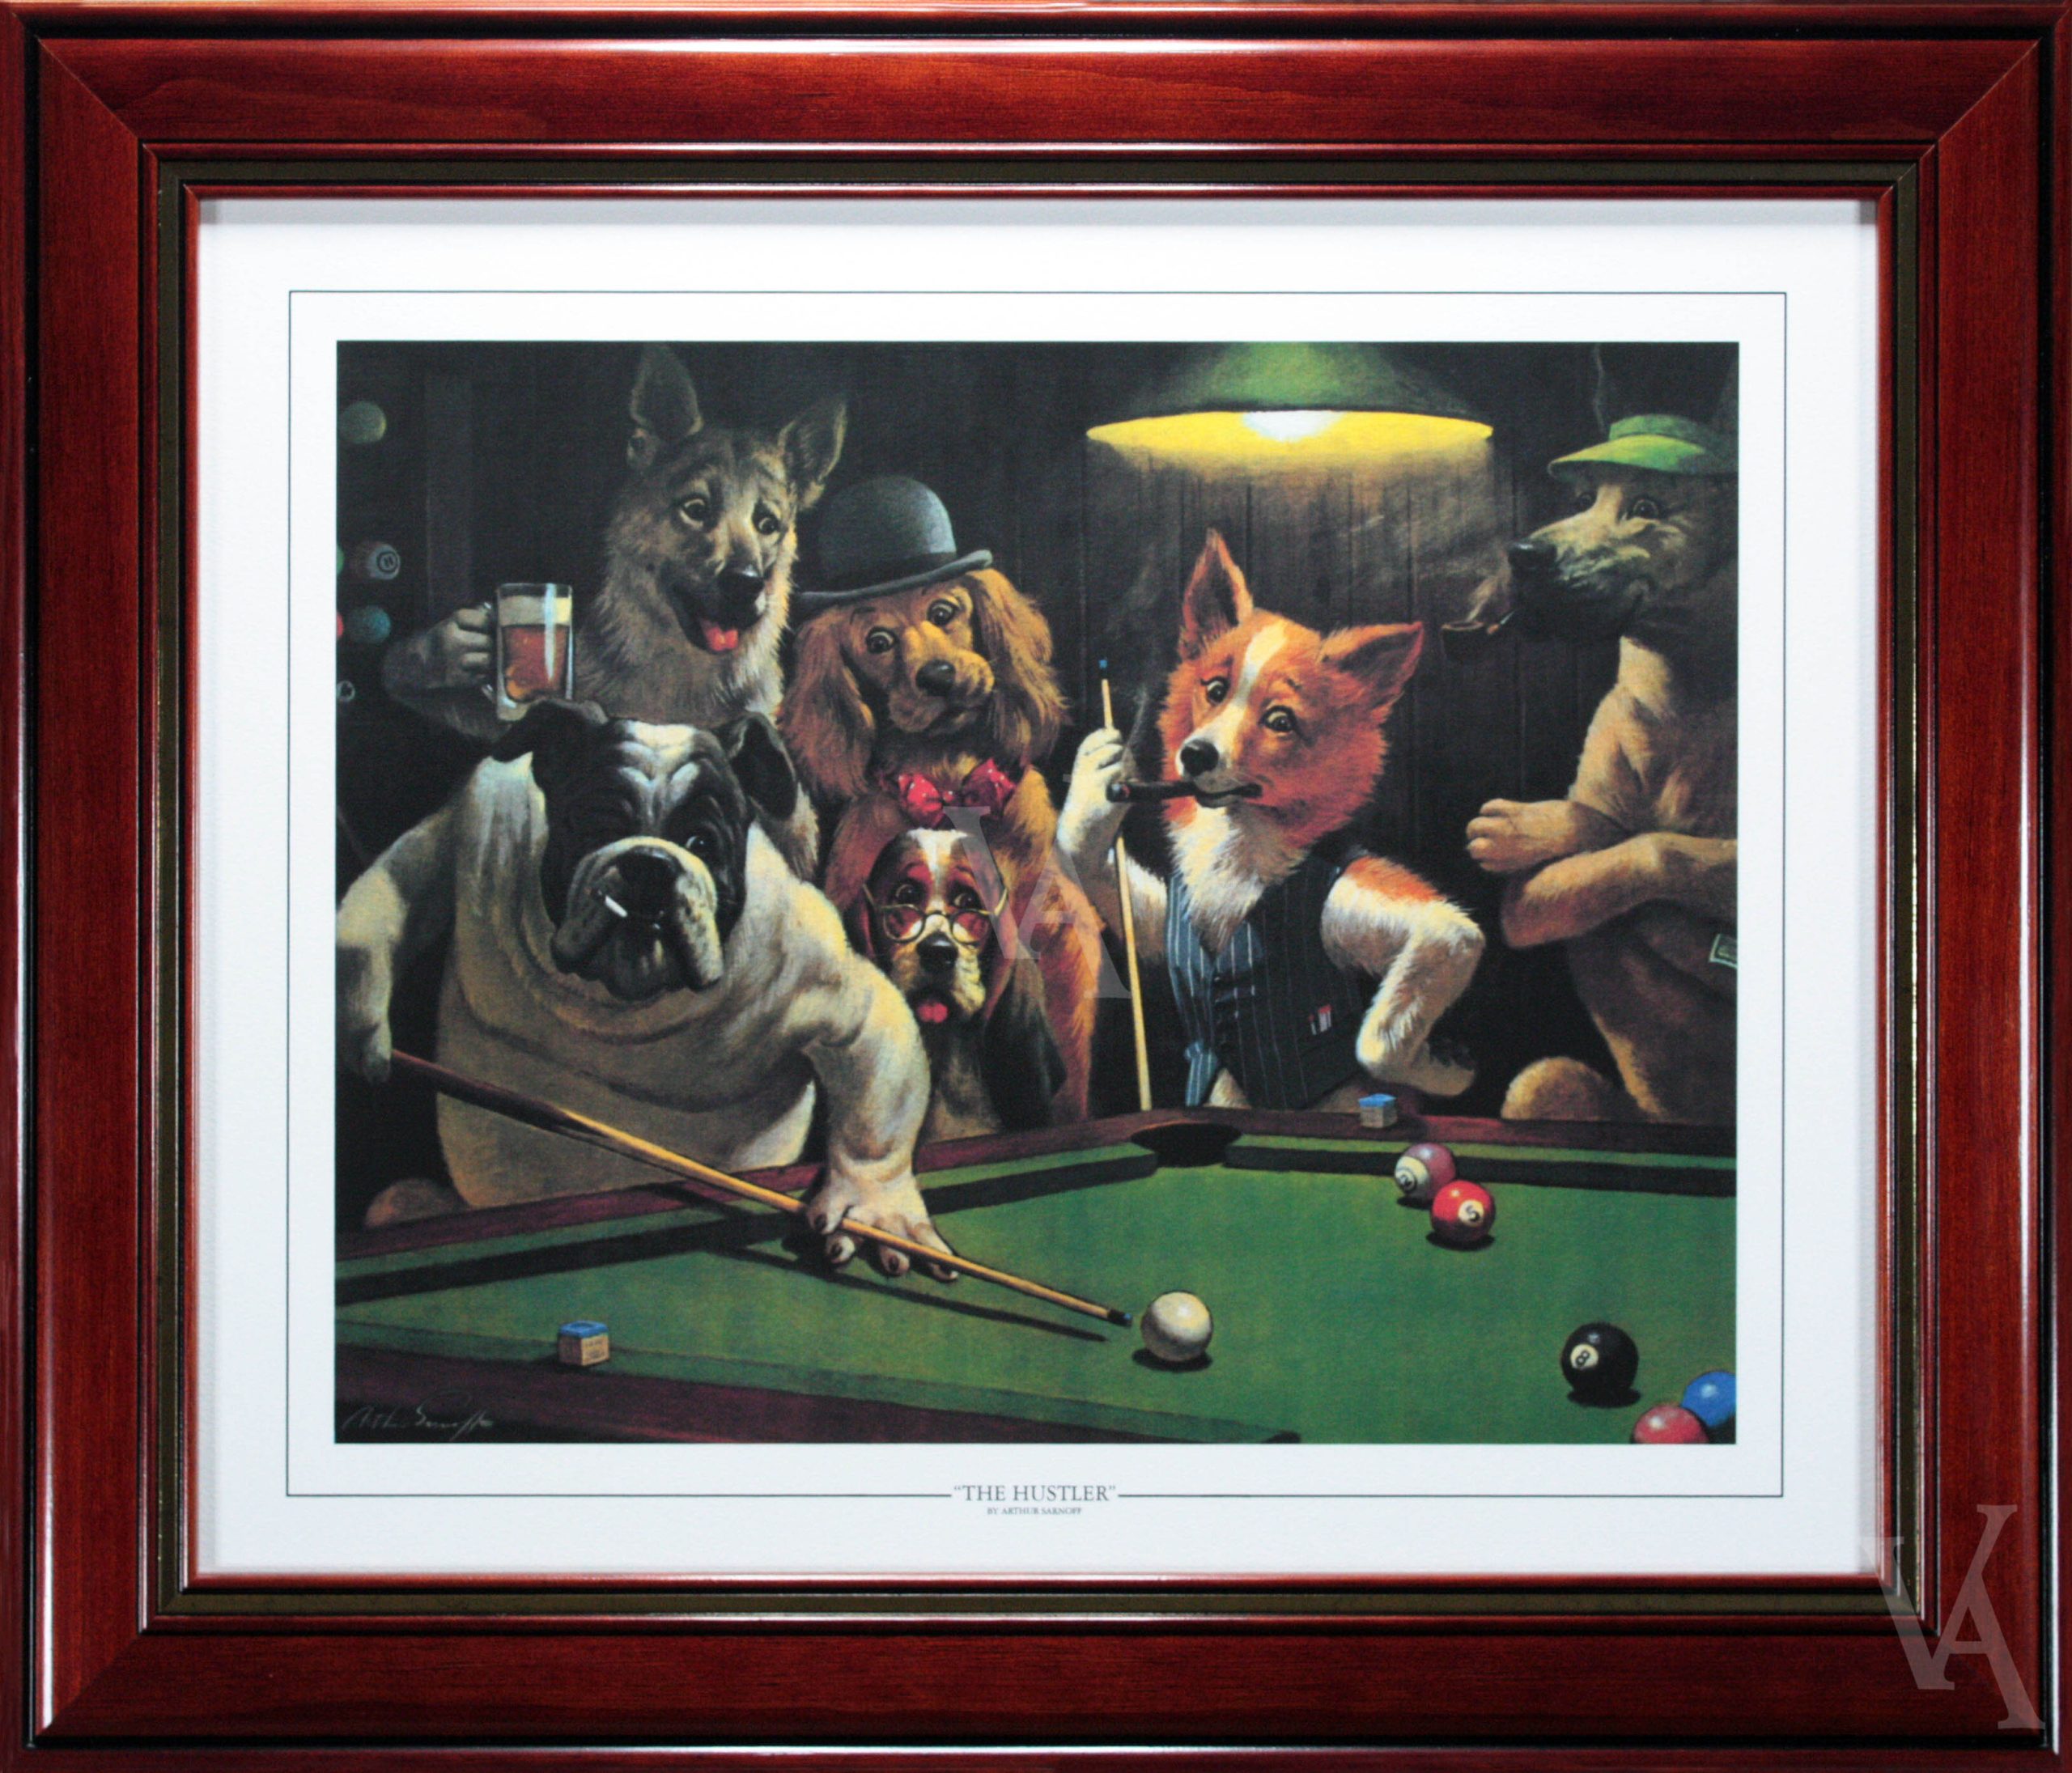 Snooker Dogs billard room framed poster print memorabilia. The Hustler snooker dogs collection.